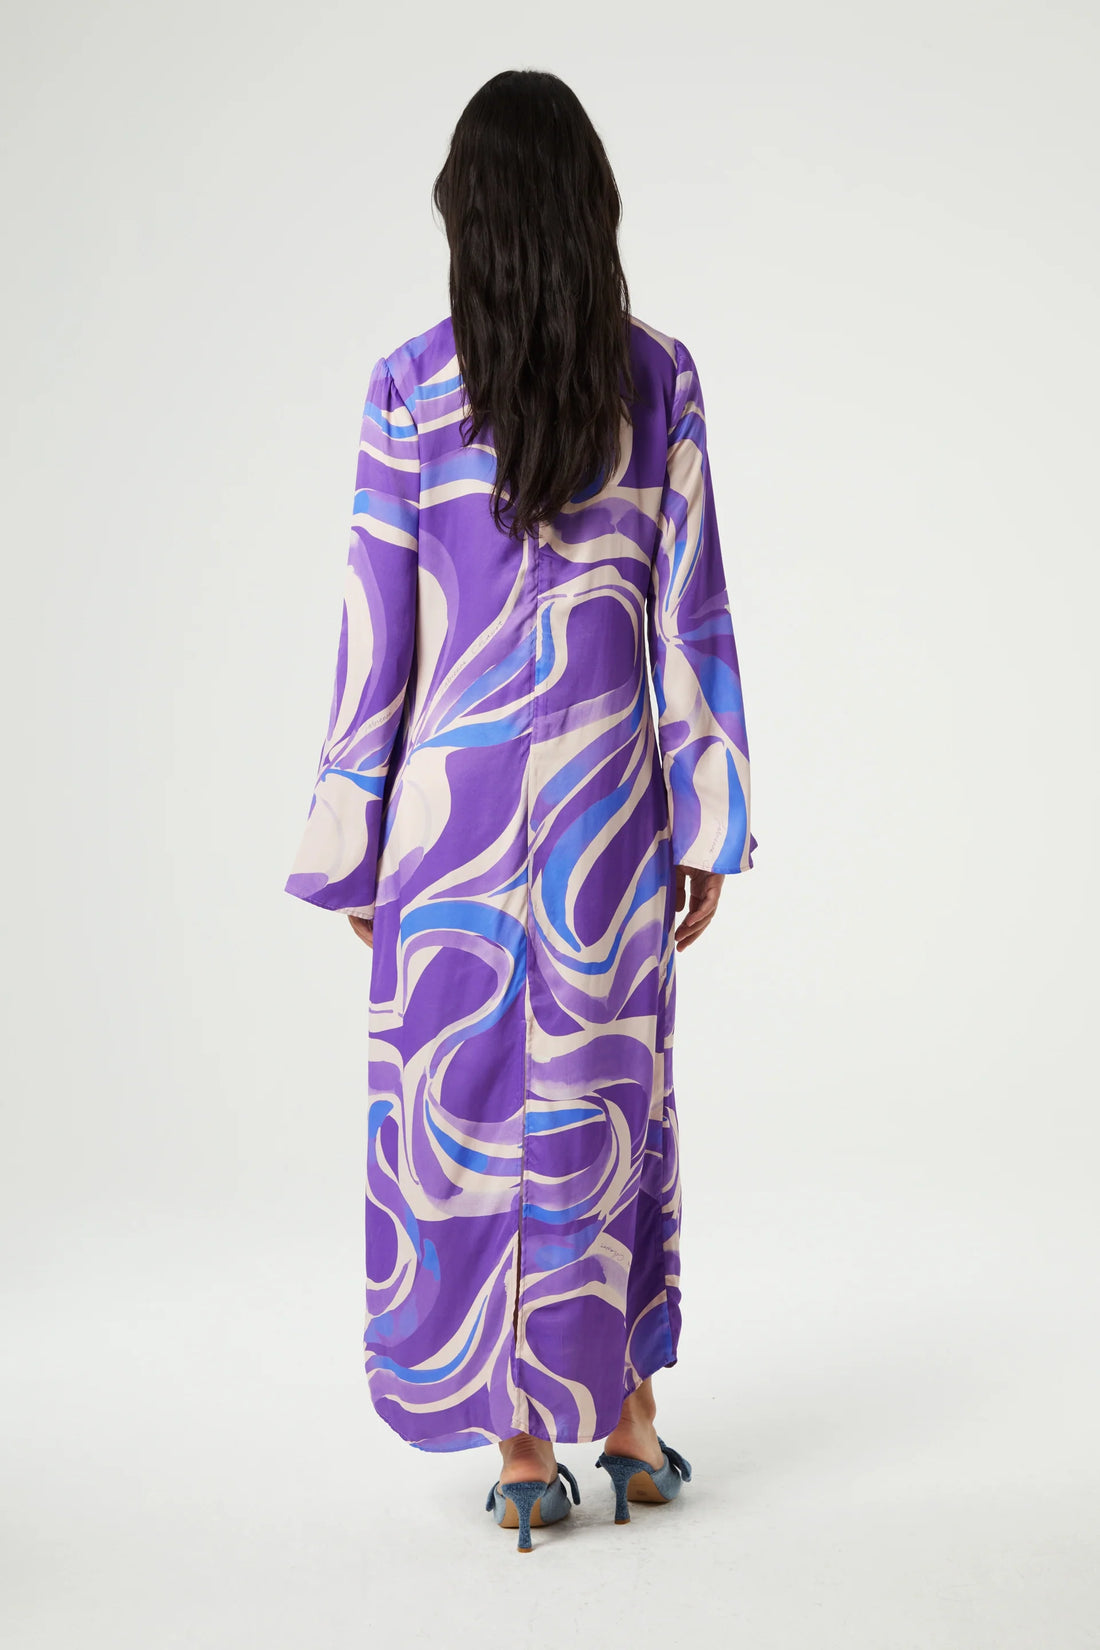 Shop the Aurora Dress in Purple Rave Cornflow by Fabienne Chapot at Jessimara.com